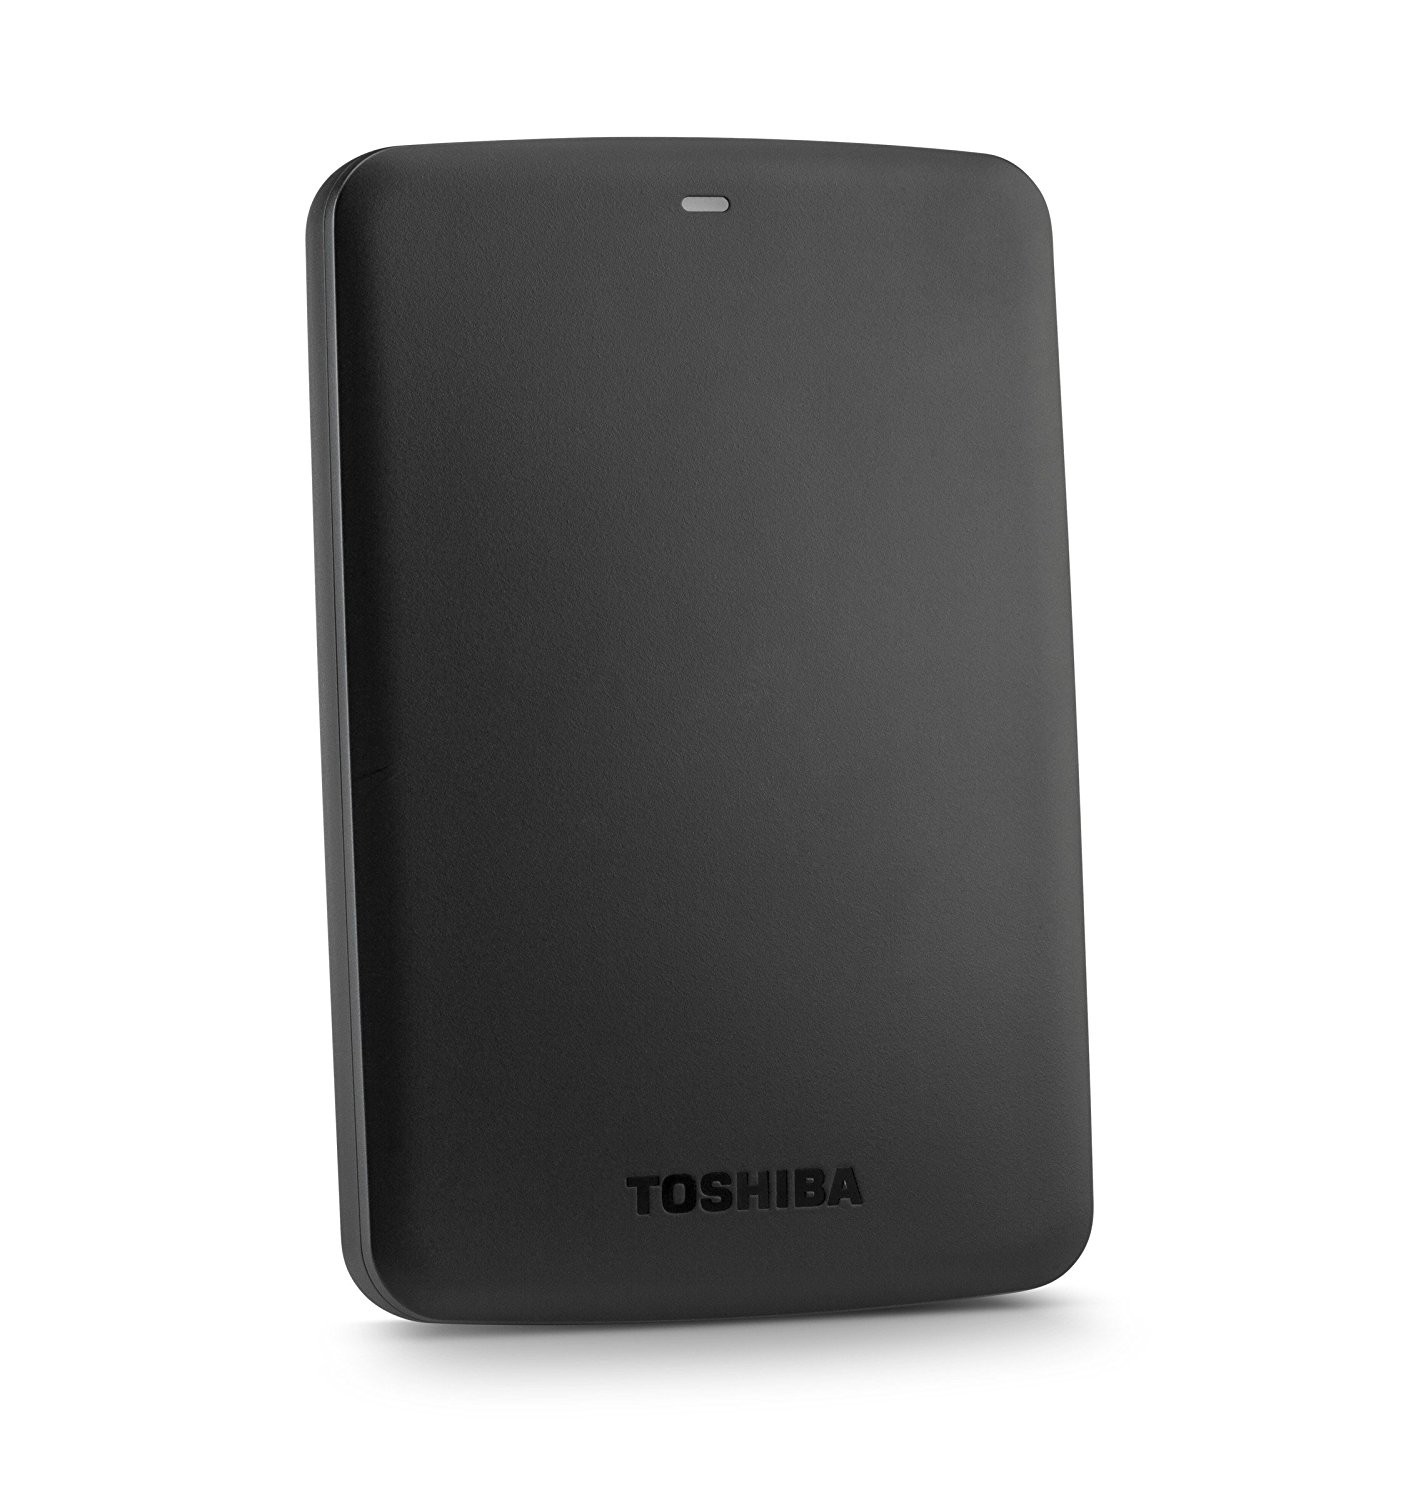 HDTB420AK3AA # TOSHIBA EXTERNAL HDD CANVIO BASIC 2TB, BLACK